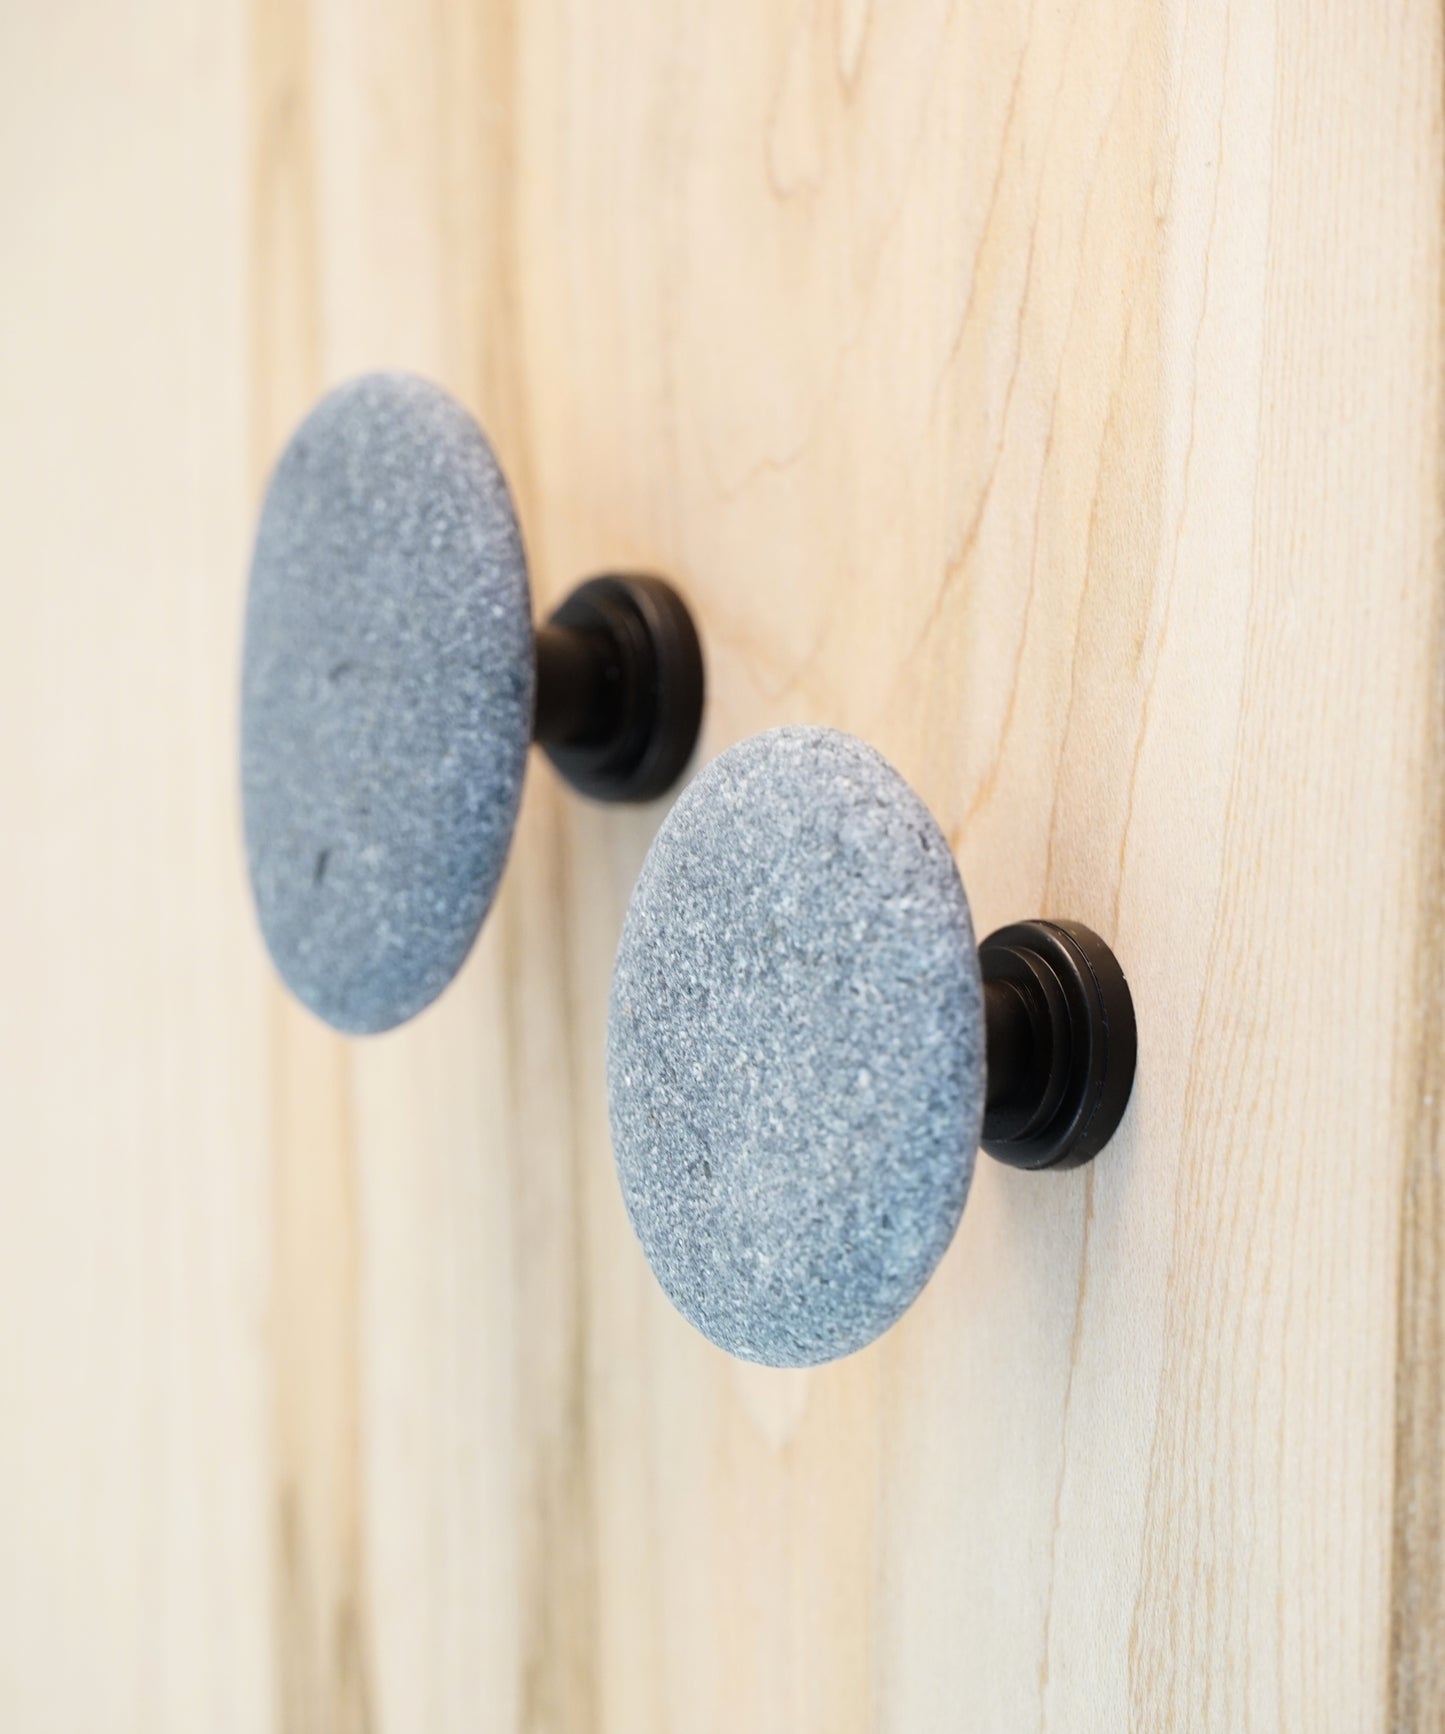 Beach Pebble Stone Rock Cabinet Knobs - Set of 8 Gray Stones